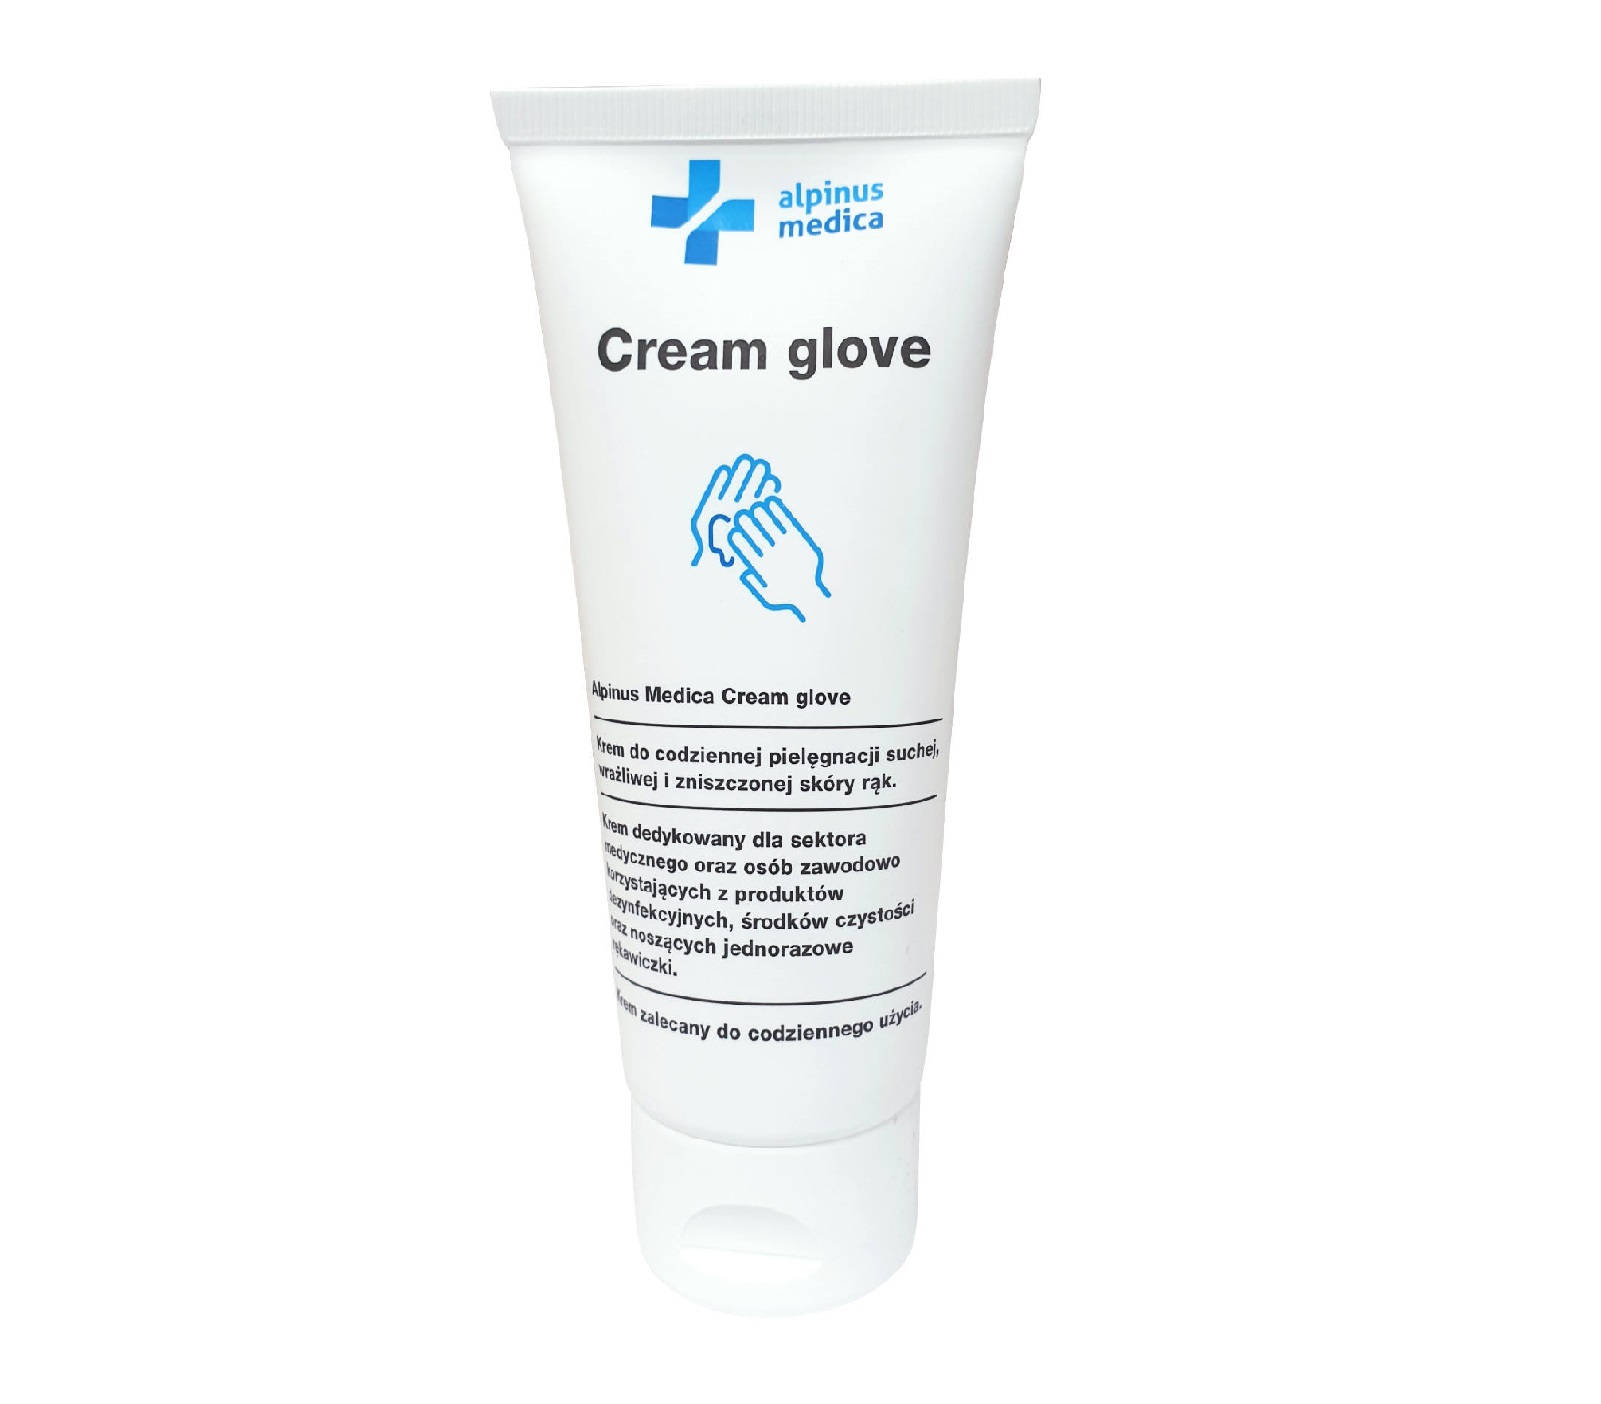 Cream glove